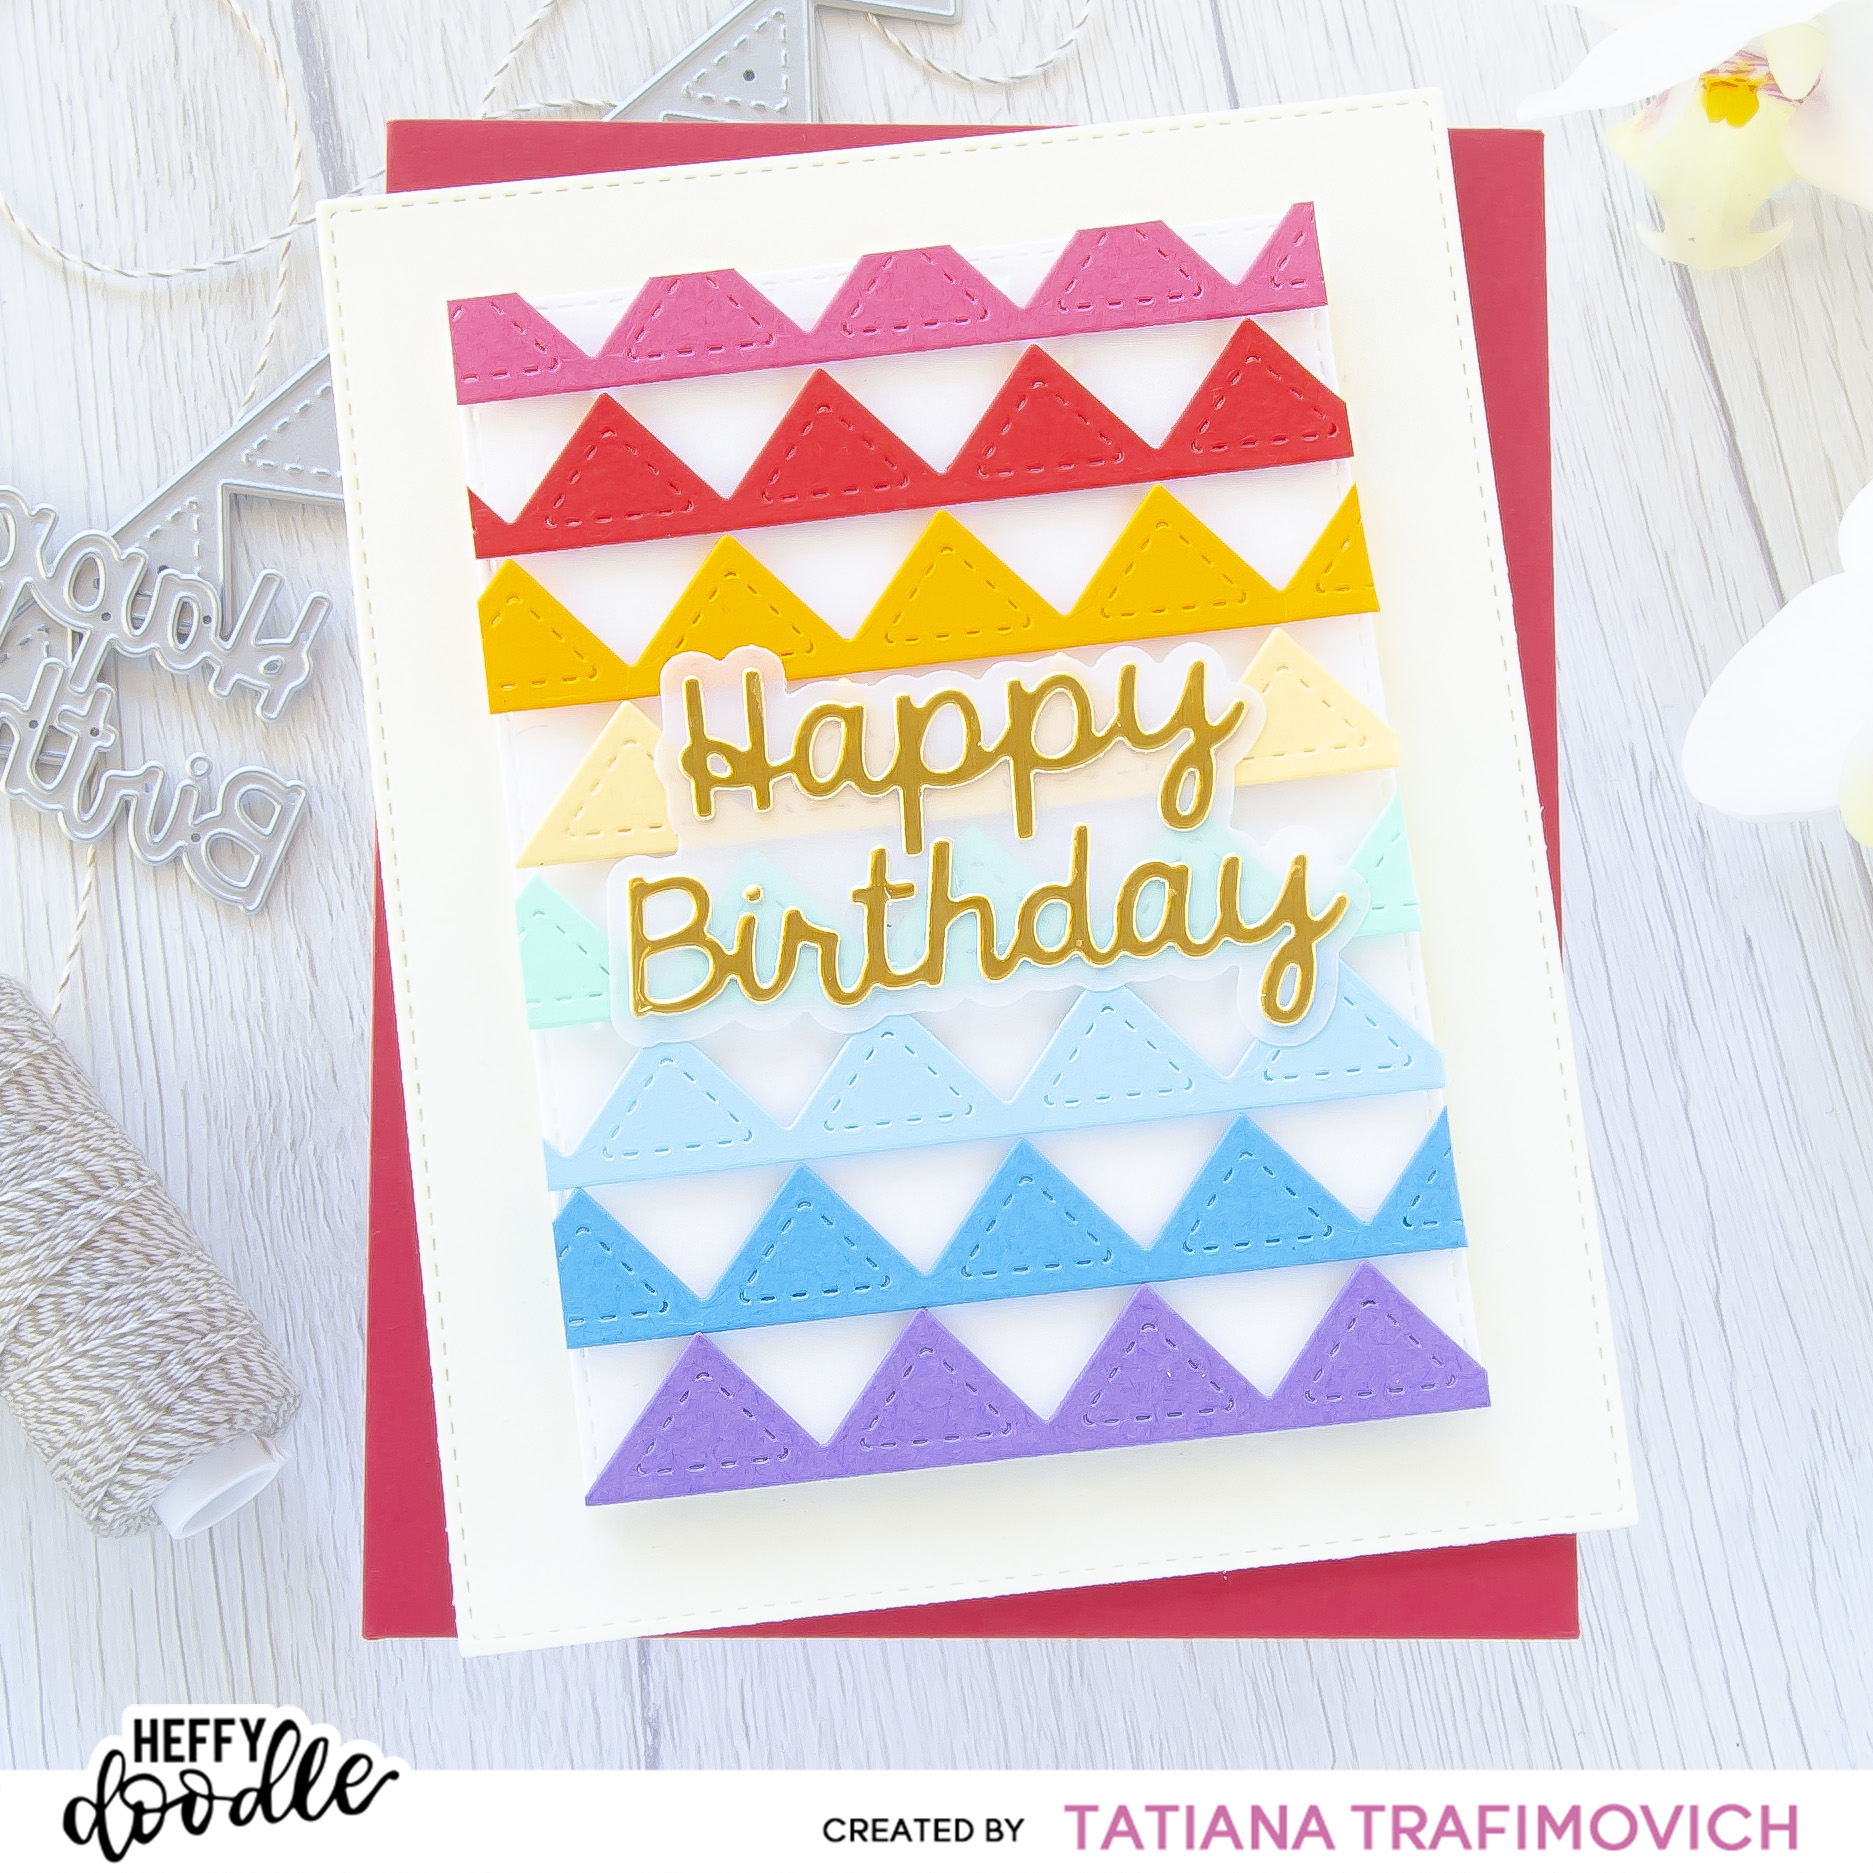 Happy Birthday #handmade card by Tatiana Trafimovich #tatianacraftandart - Zig-A-Zig Ah Chevron Dies by Heffy Doodle #heffydoodle